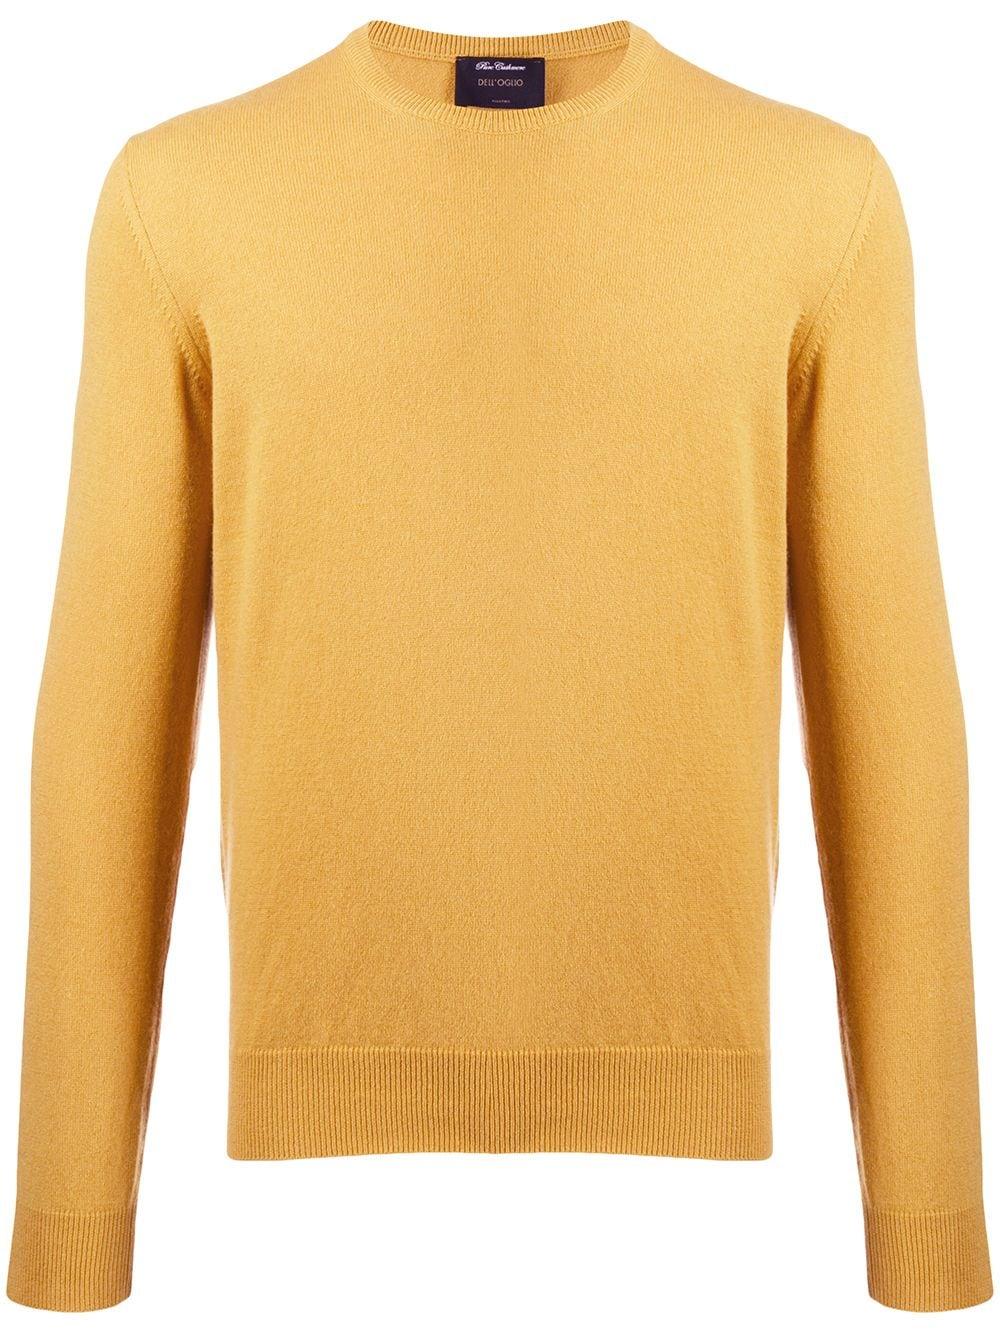 Dell'Oglio Crew-neck Cashmere Sweater in Yellow for Men - Lyst